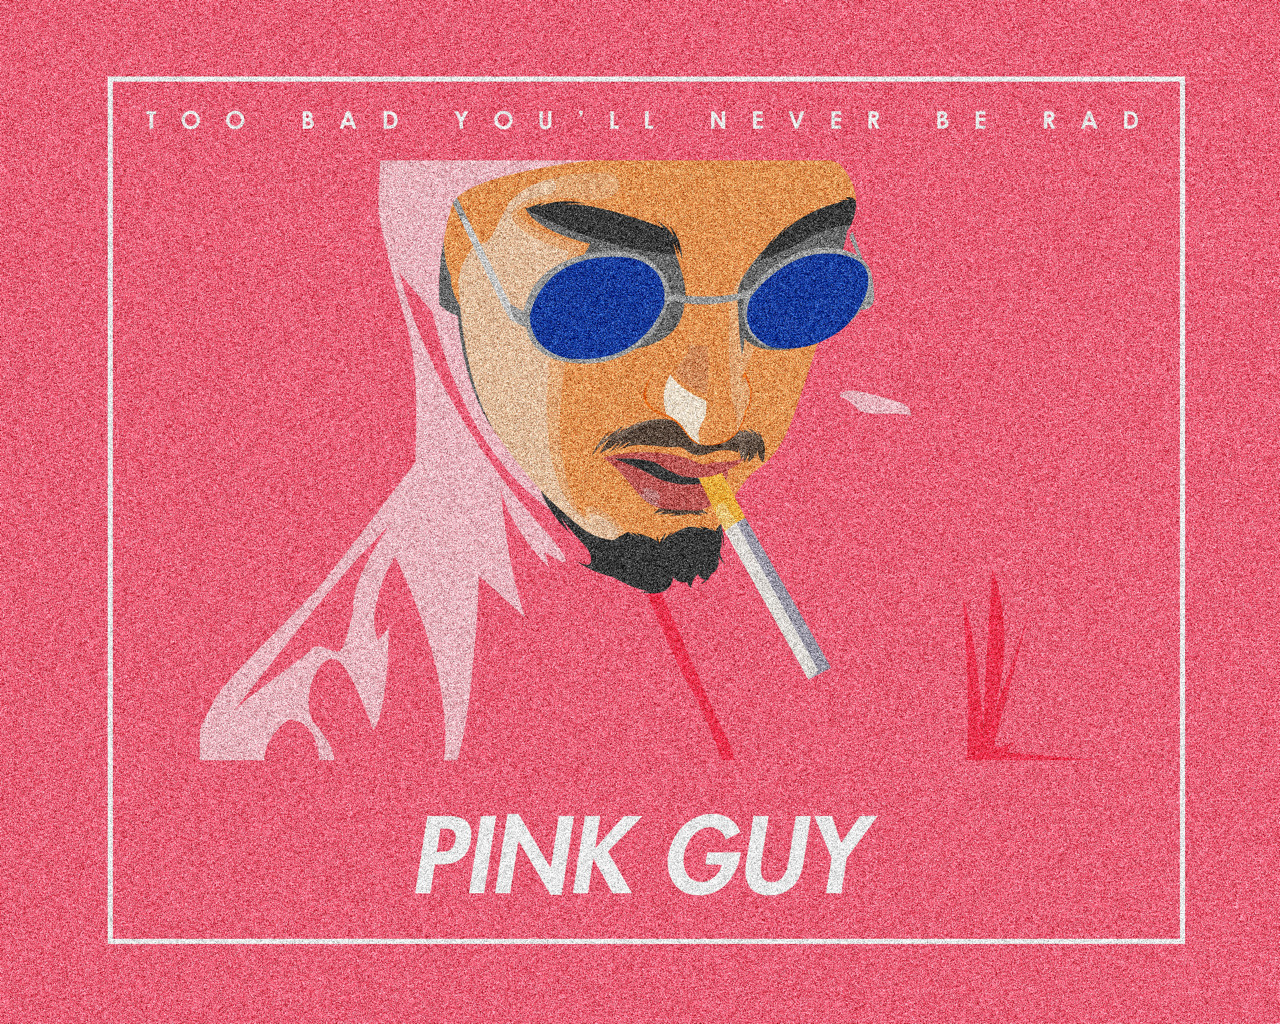 Pink Guy // George “joji” Miller, HD Wallpaper